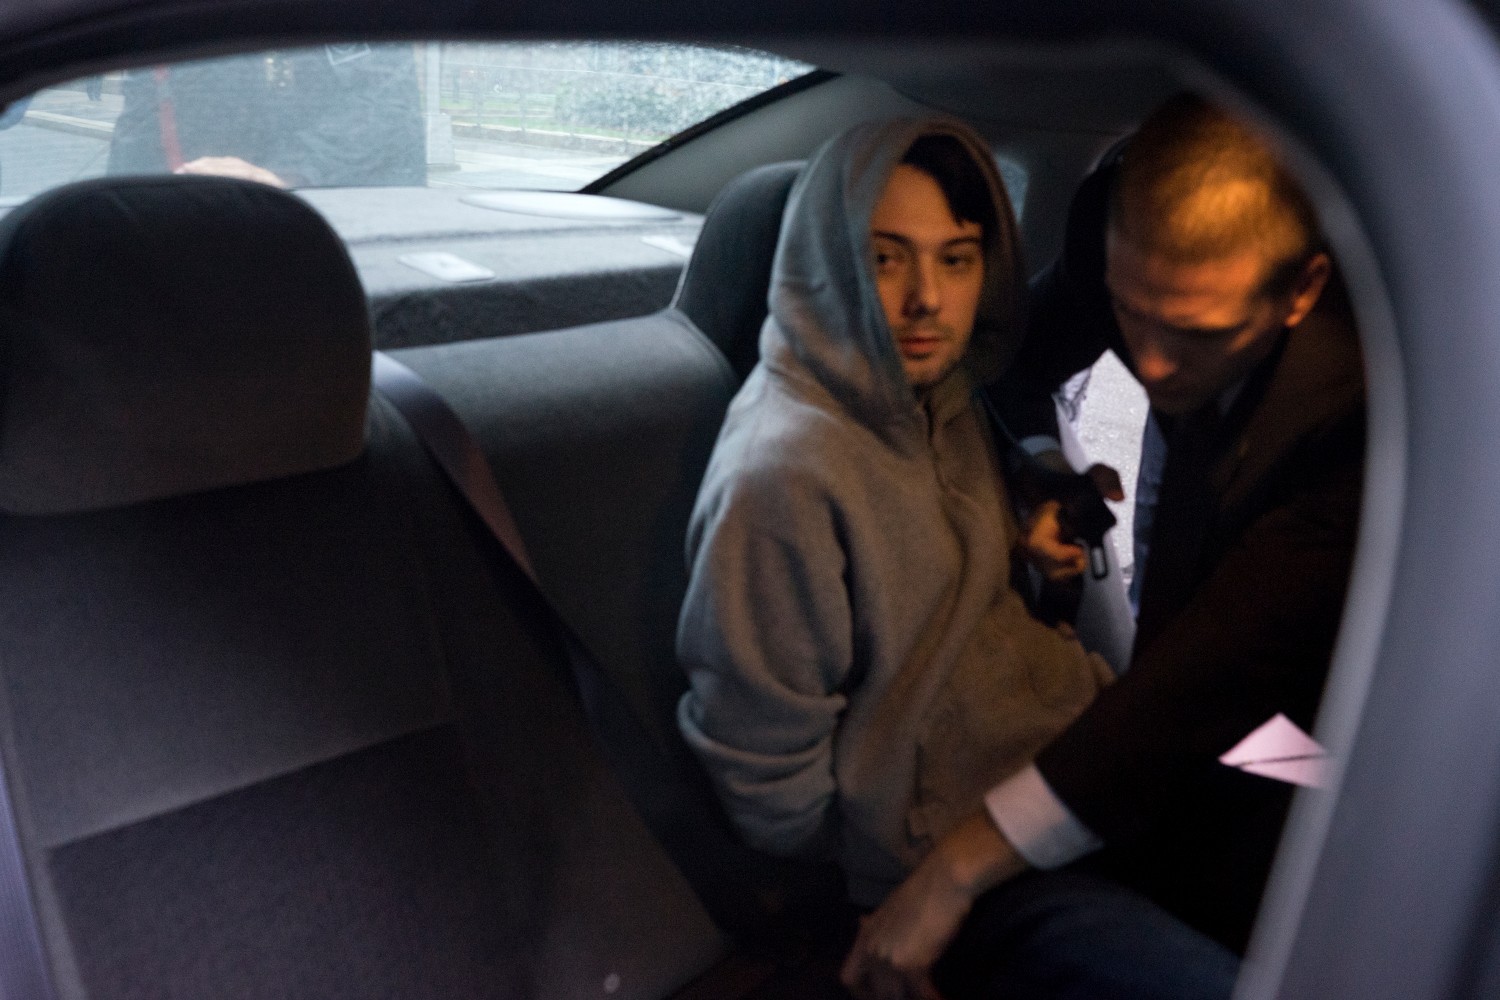 Hapšenje Martina Škreljija, Njujork, 17. decembar 2015. (Foto: Craig Ruttle/AP Photo)